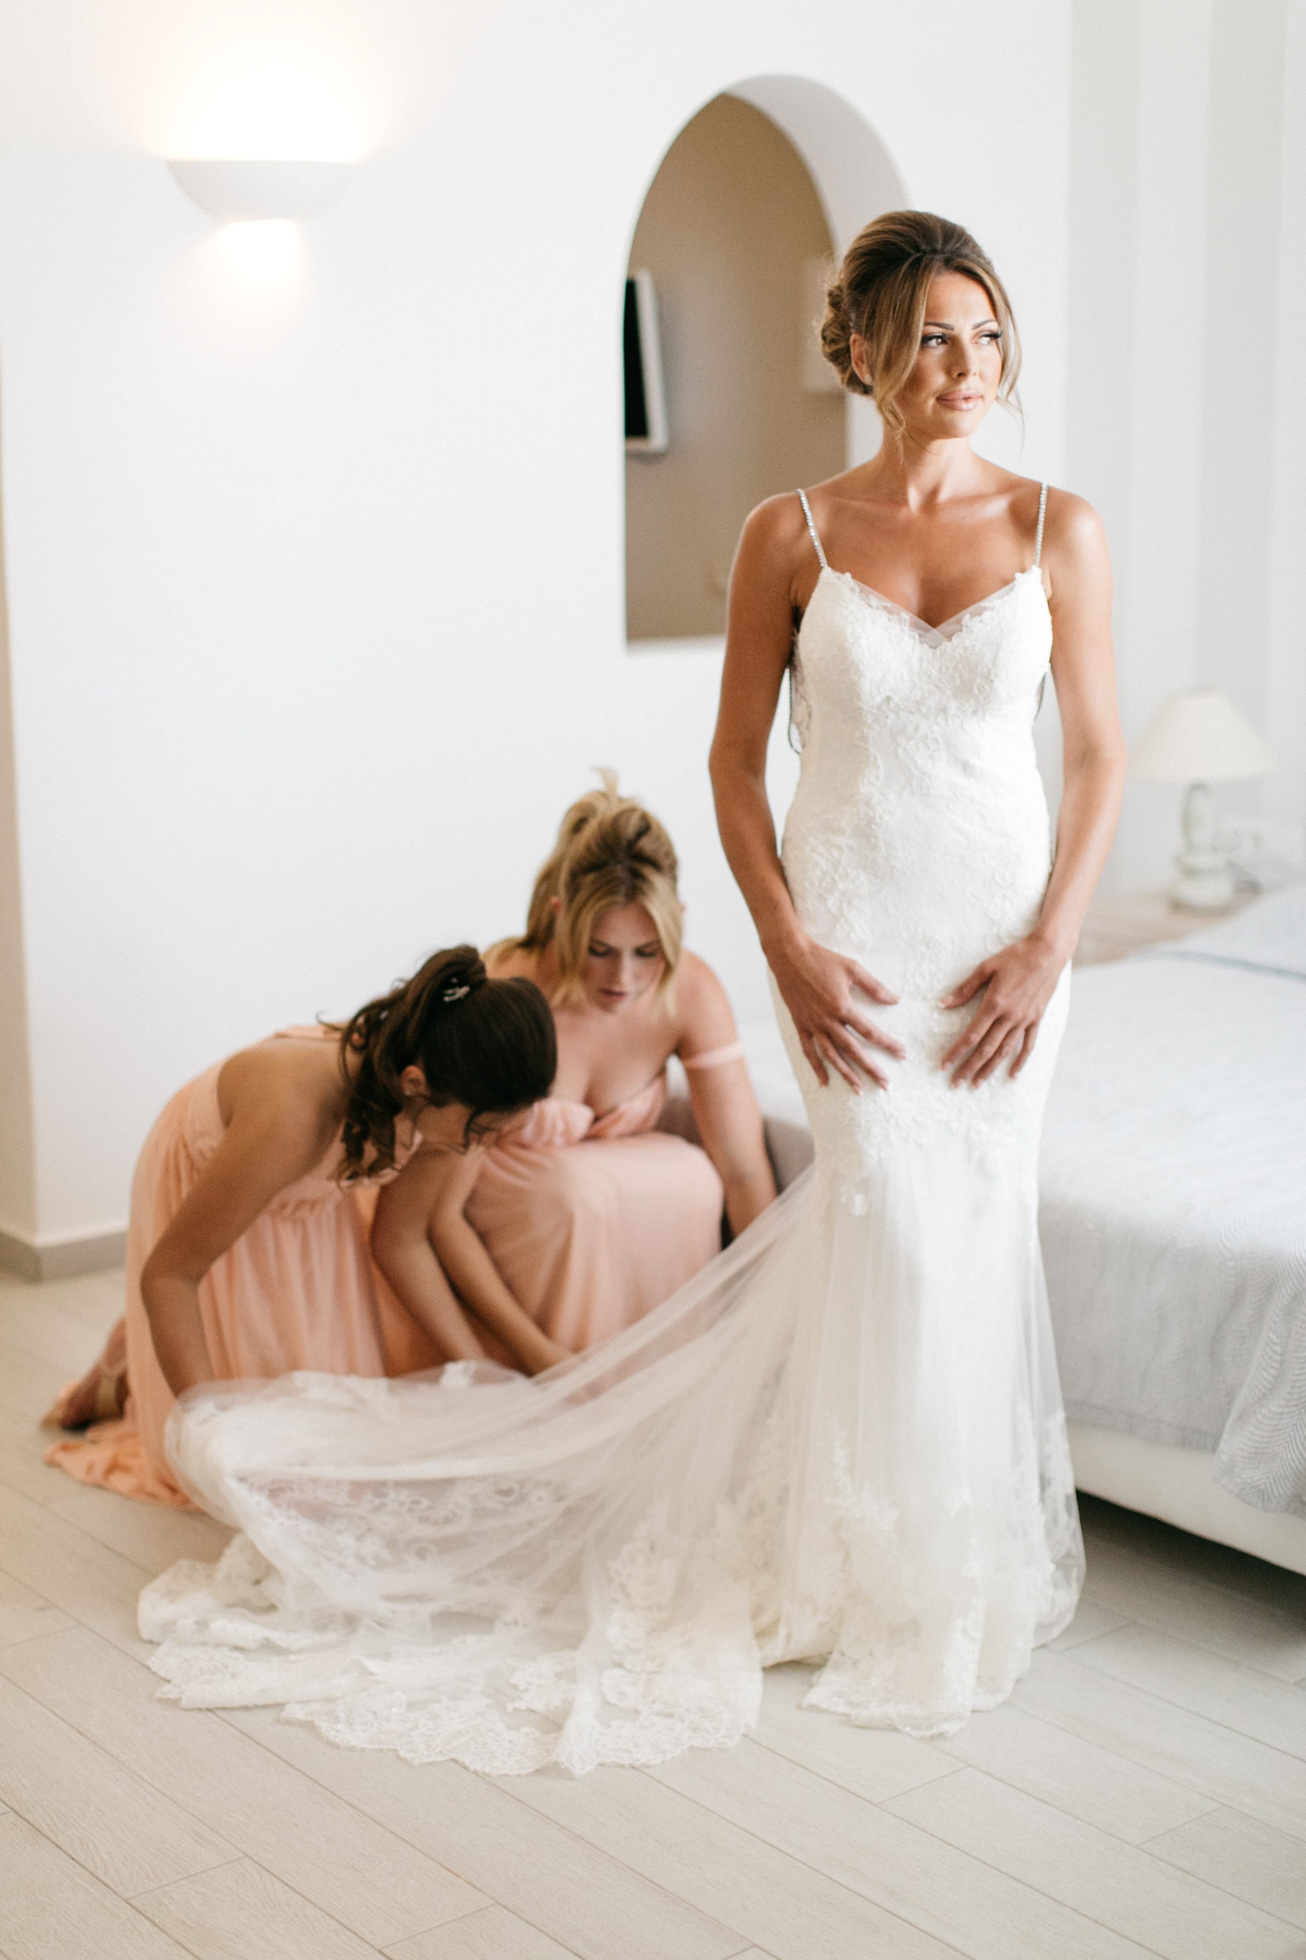 Bridal preparations for luxury white wedding in Santorini island, Greece.